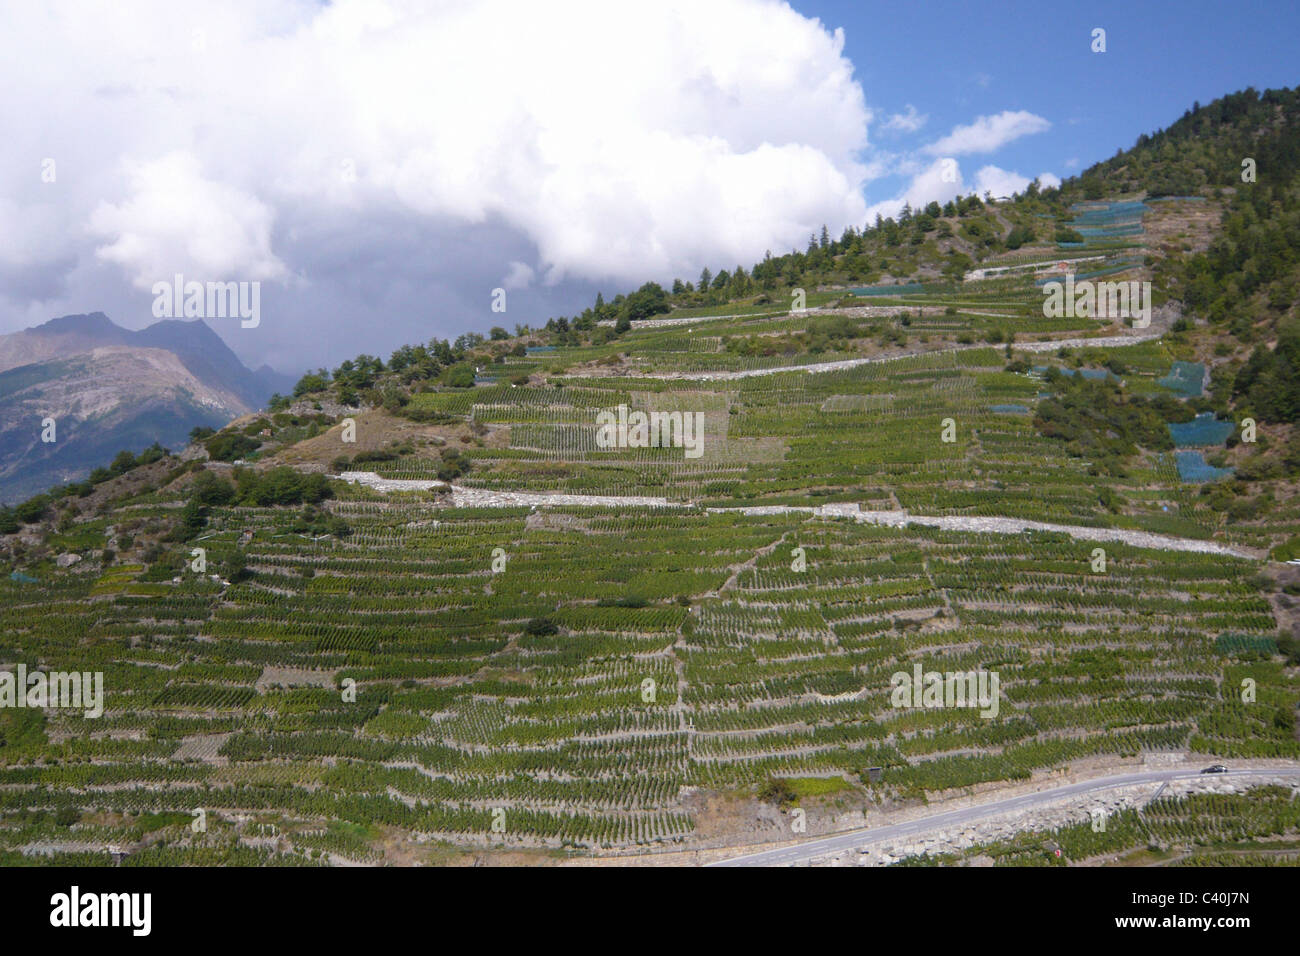 Switzerland, Valais, Visperterminen, vineyard, wine, shoots, wine cultivation Stock Photo